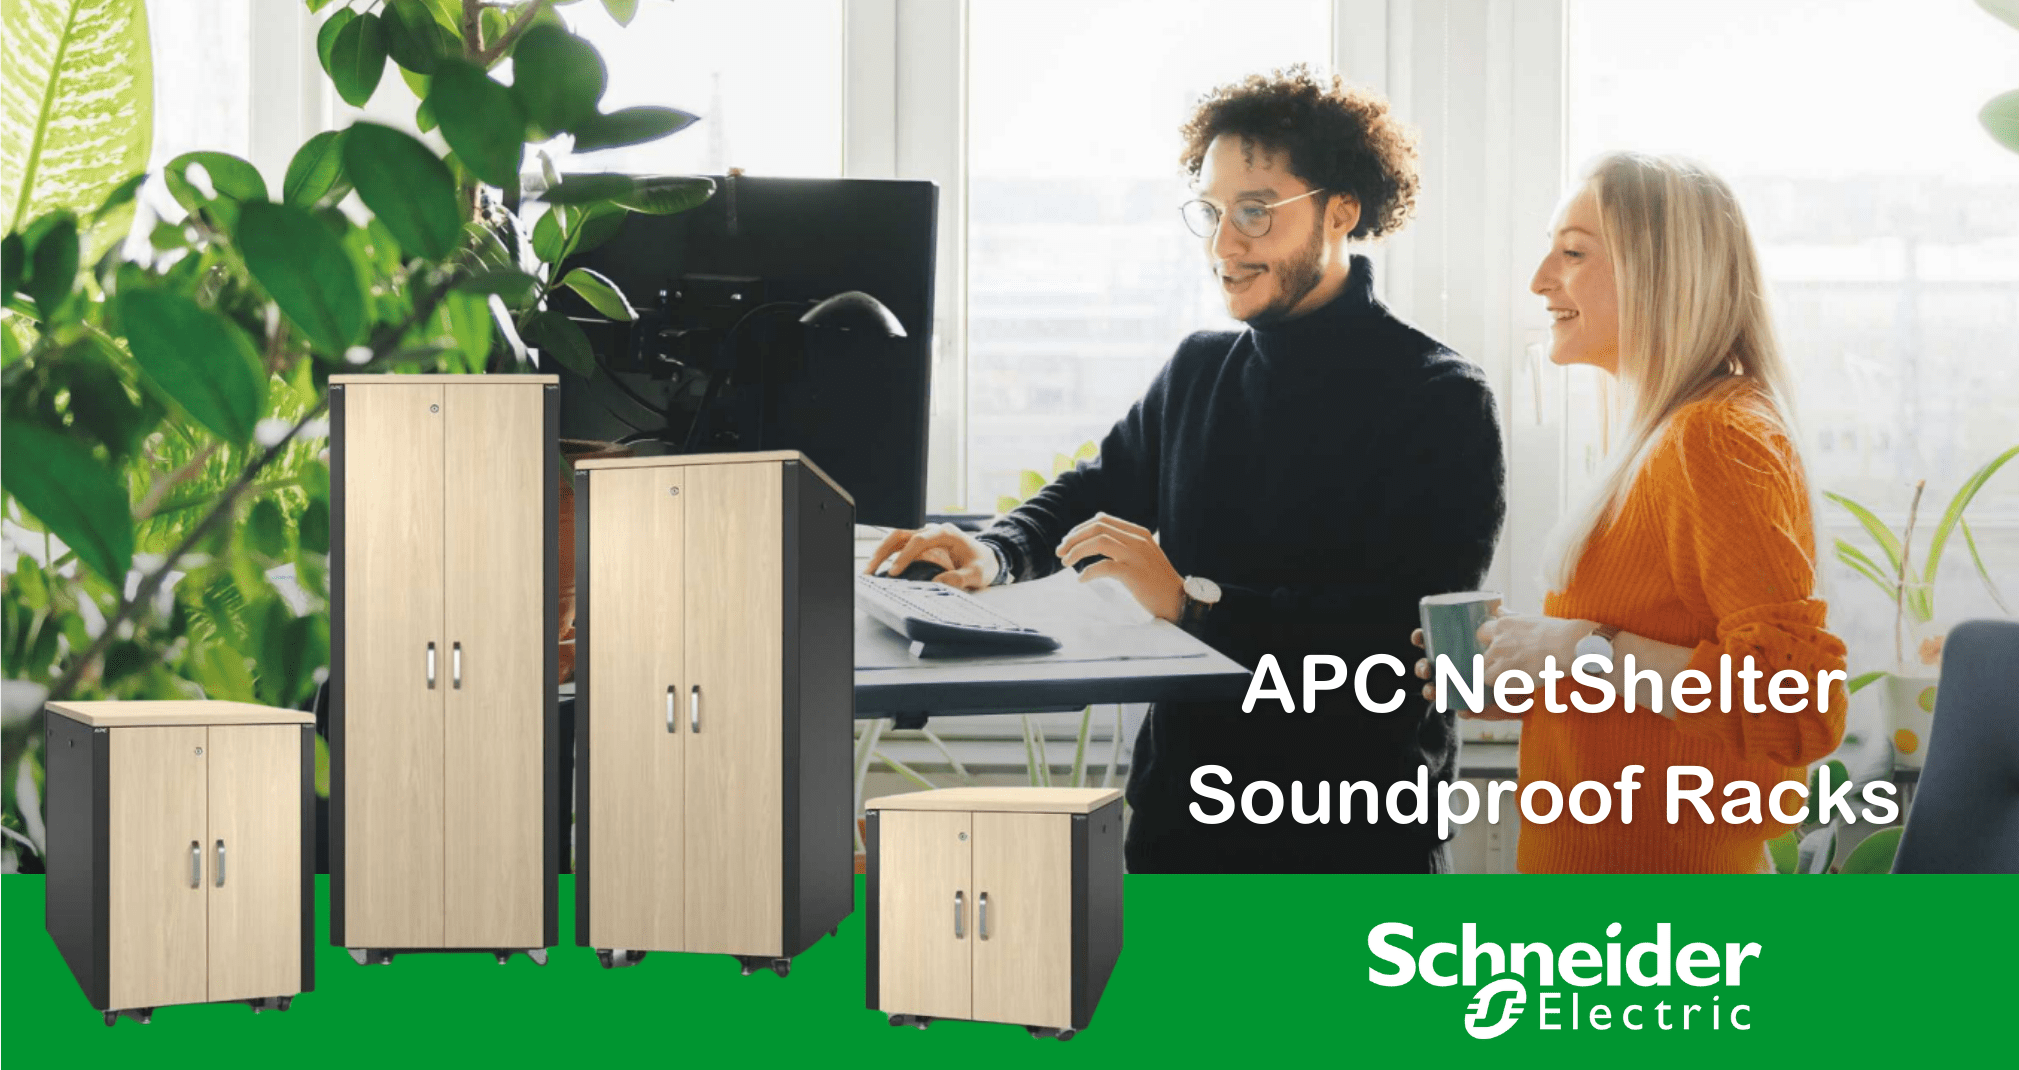 APC NetShelter Soundproof Racks header image